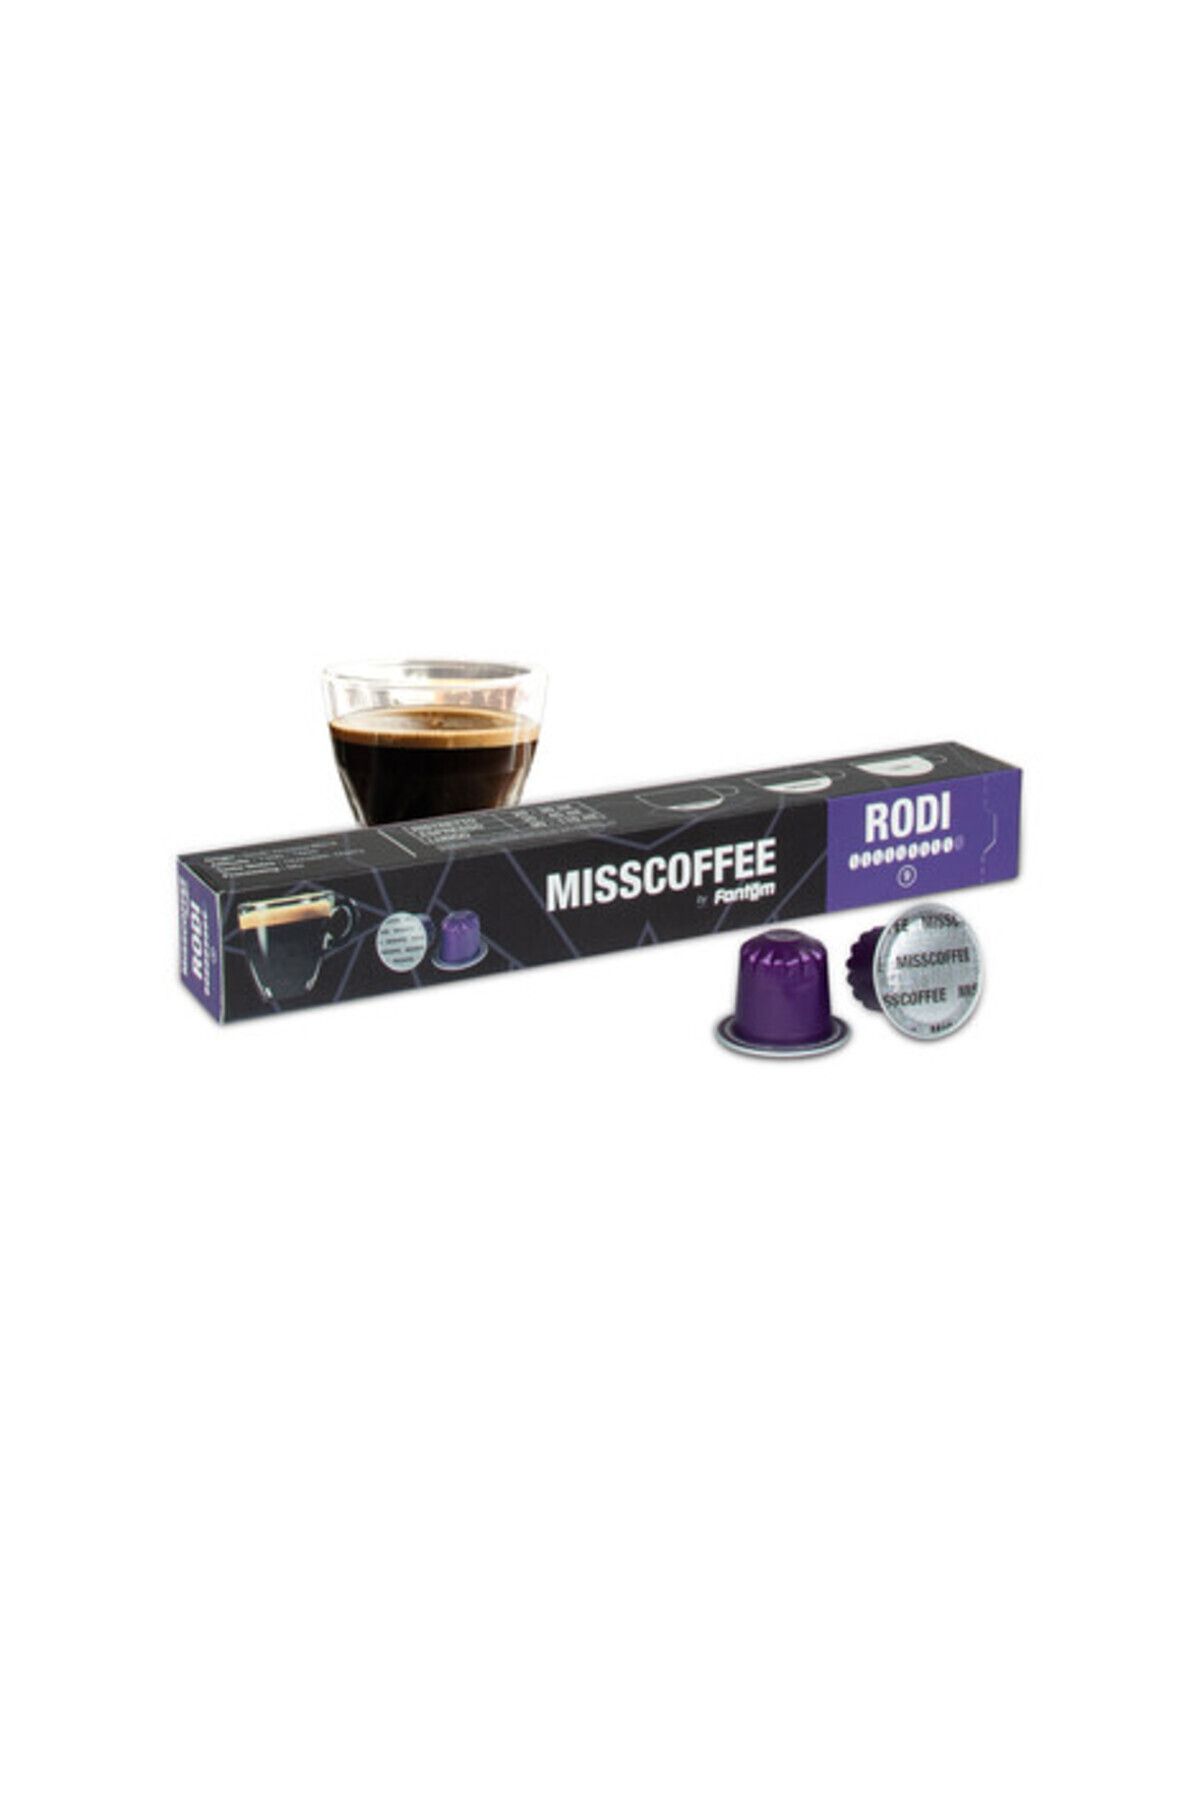 FANTOM Mısscoffee Rodı Kapsül Kahve Kutusu Nespresso Sistem Uyumlu